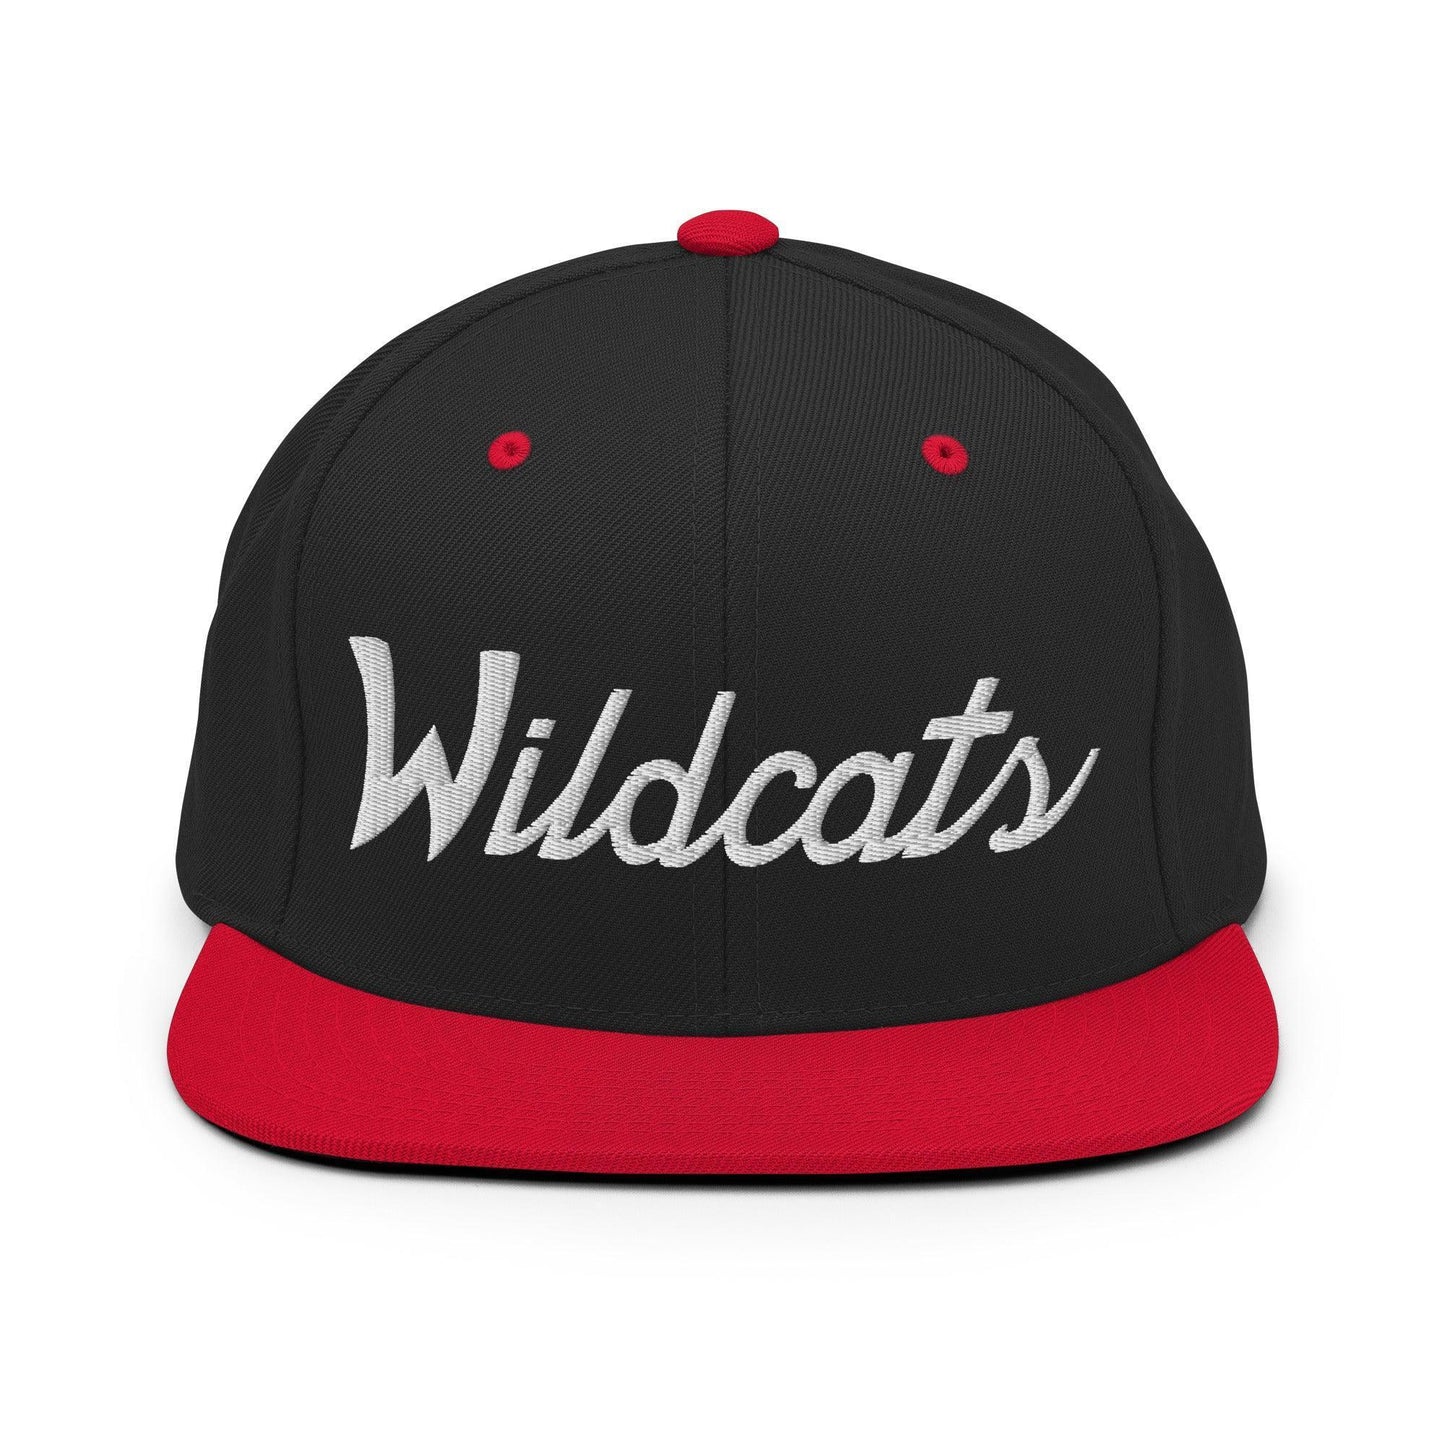 Wildcats School Mascot Script Snapback Hat Black/ Red